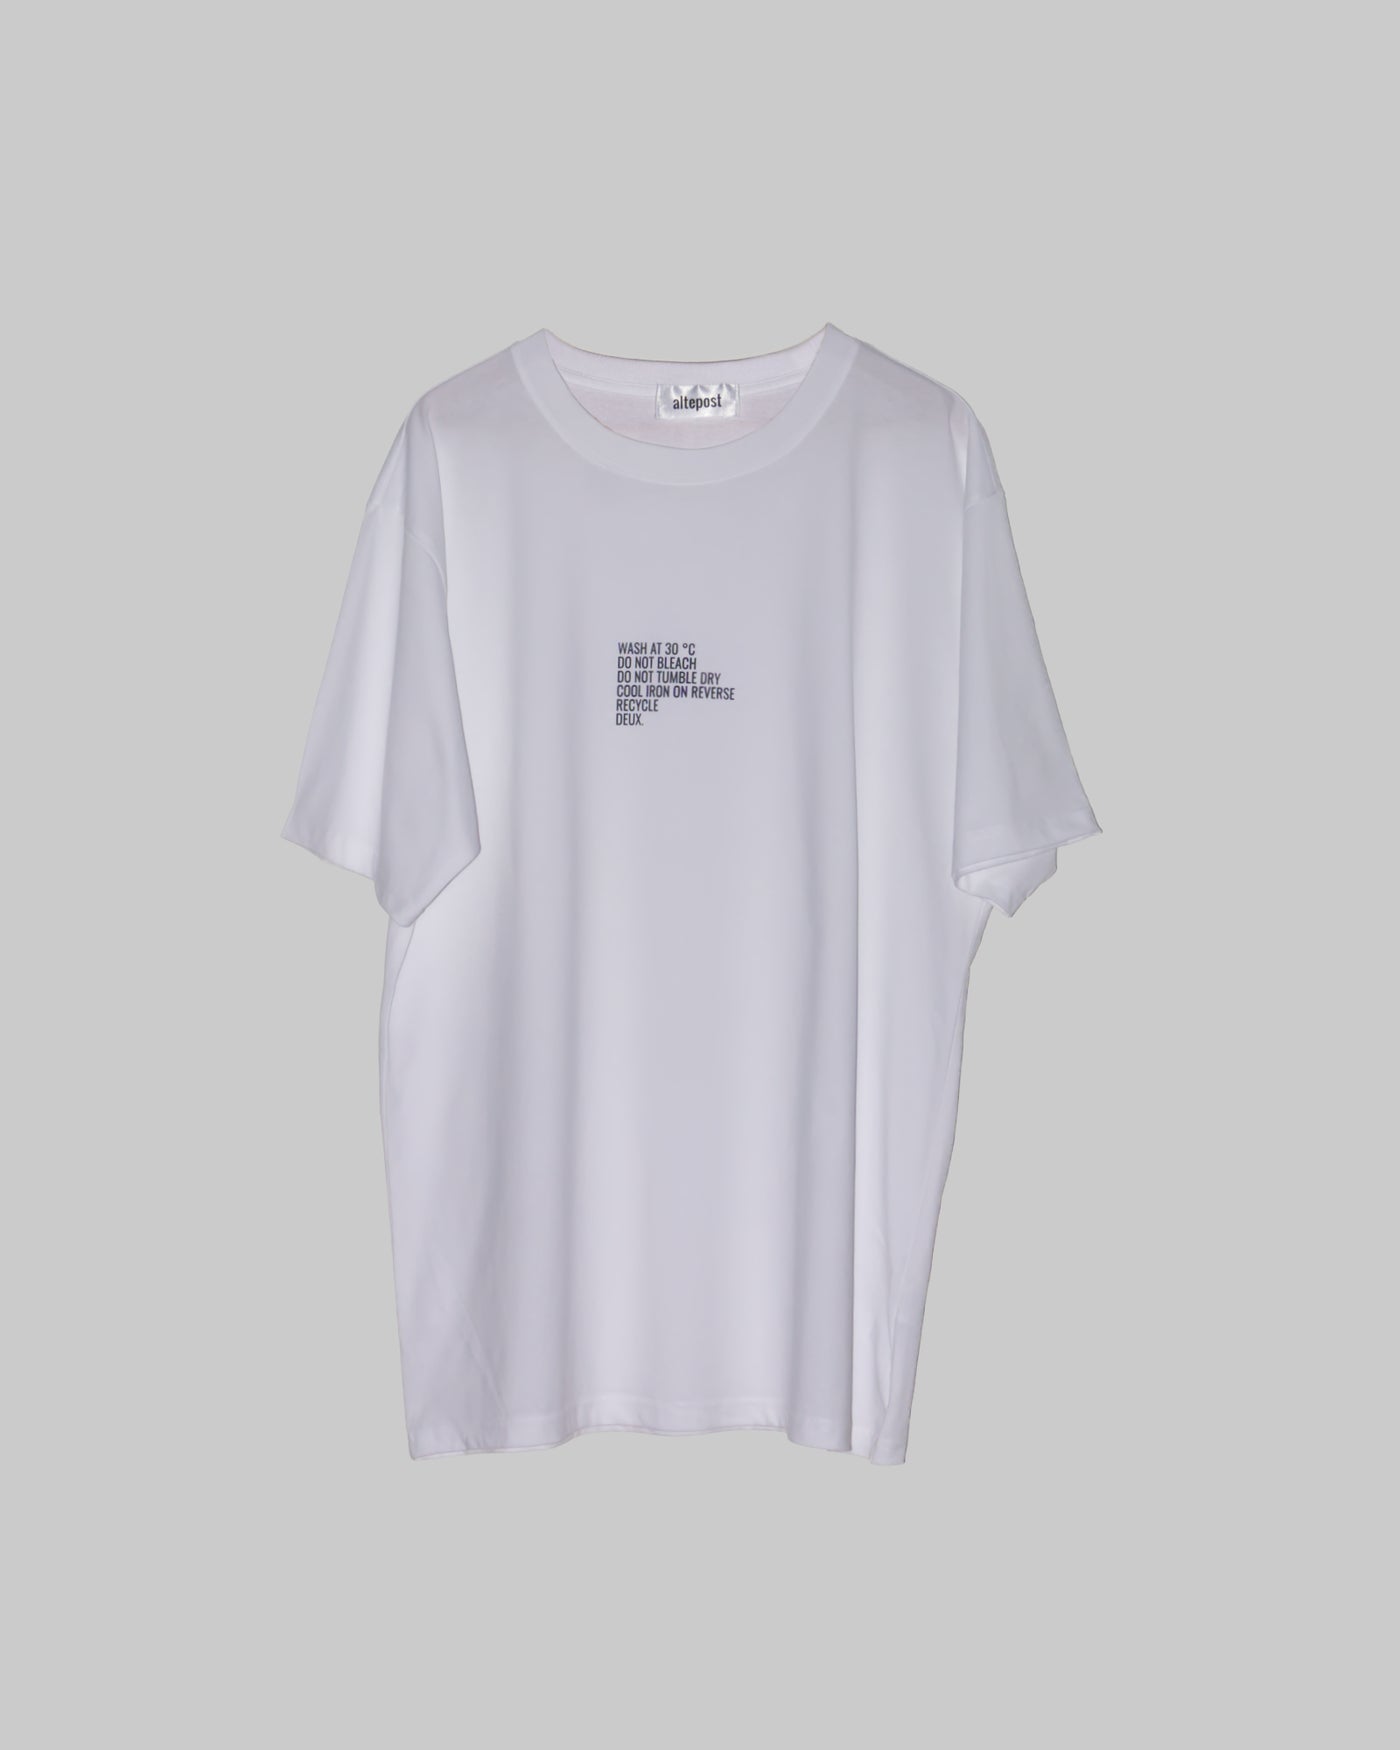 guide T-Shirt  - S,M,L,XL